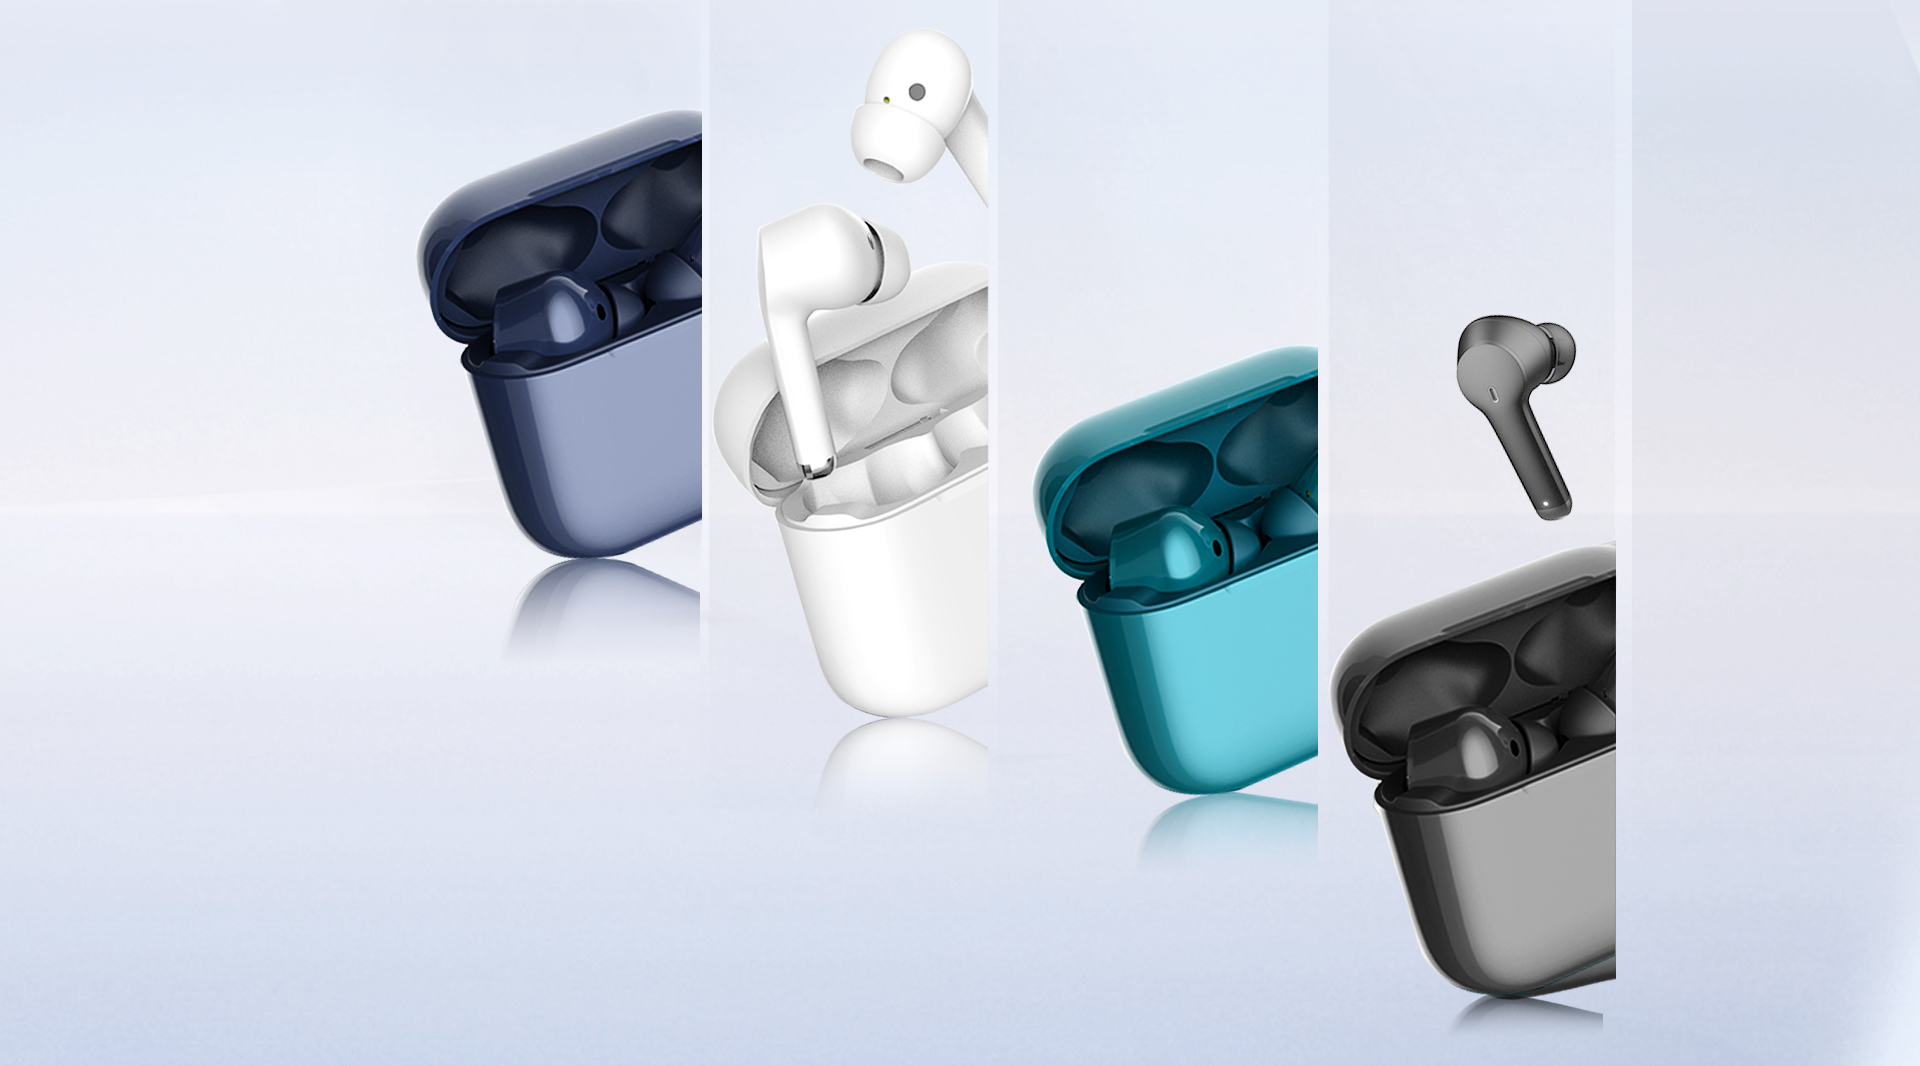 Hearing Helper Bluetooth earbuds FT-09